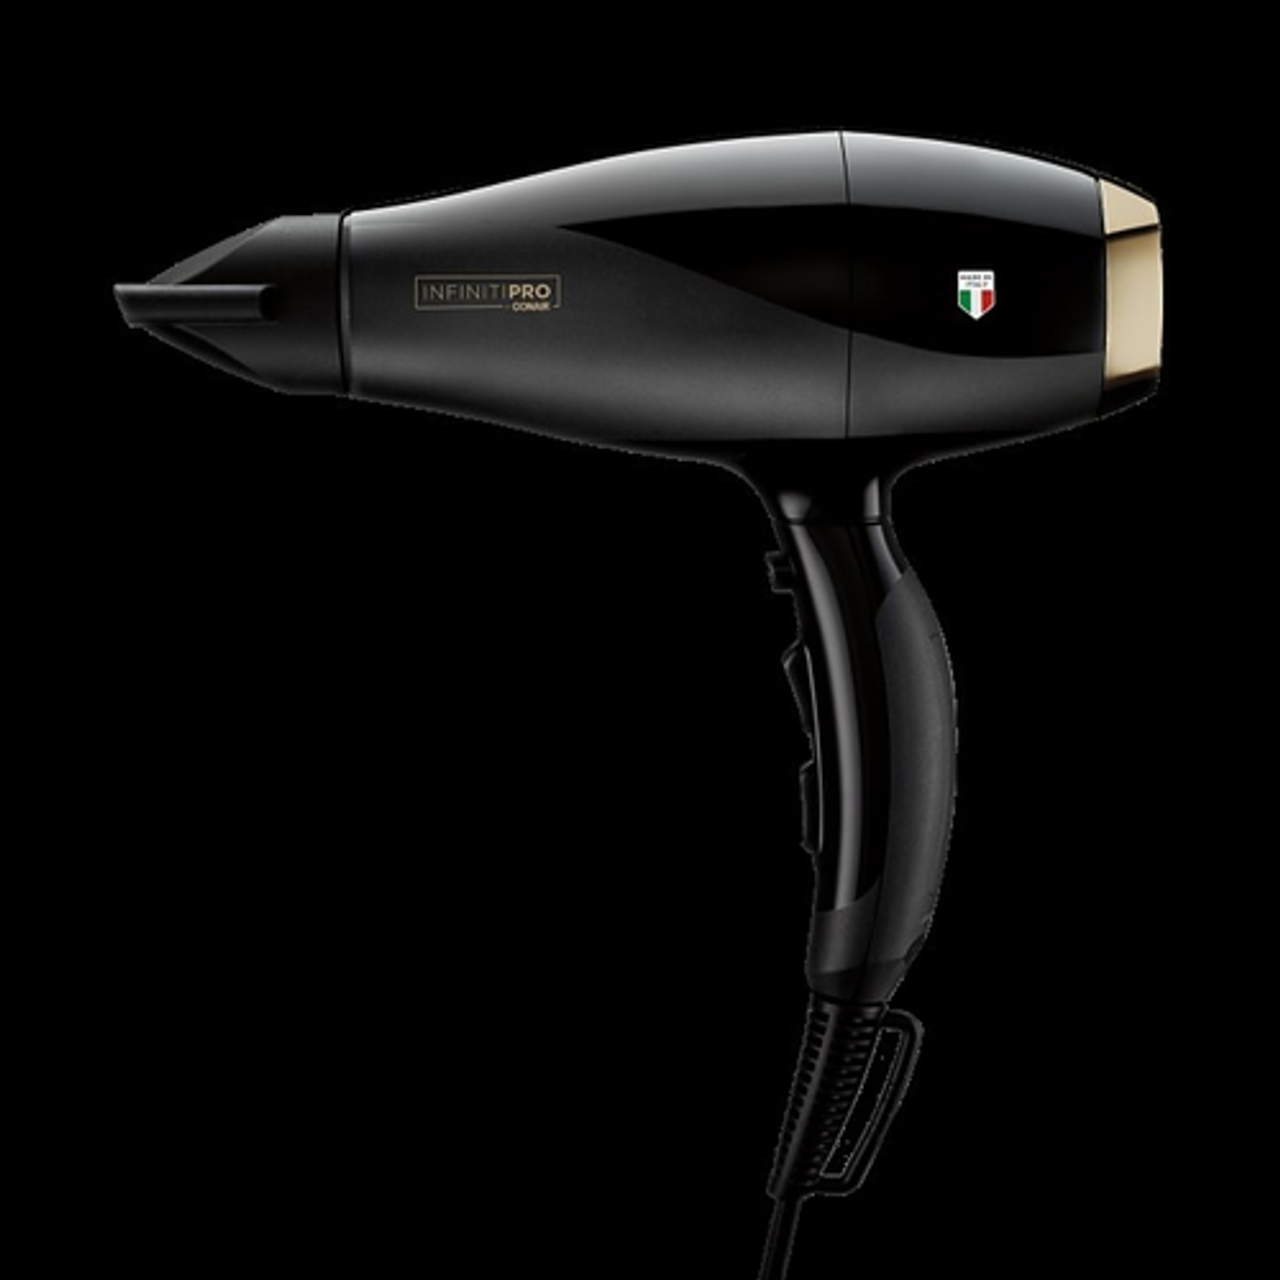 Conair - InfinitiPRO Italian Performance ArteBella Hair Dryer - Black